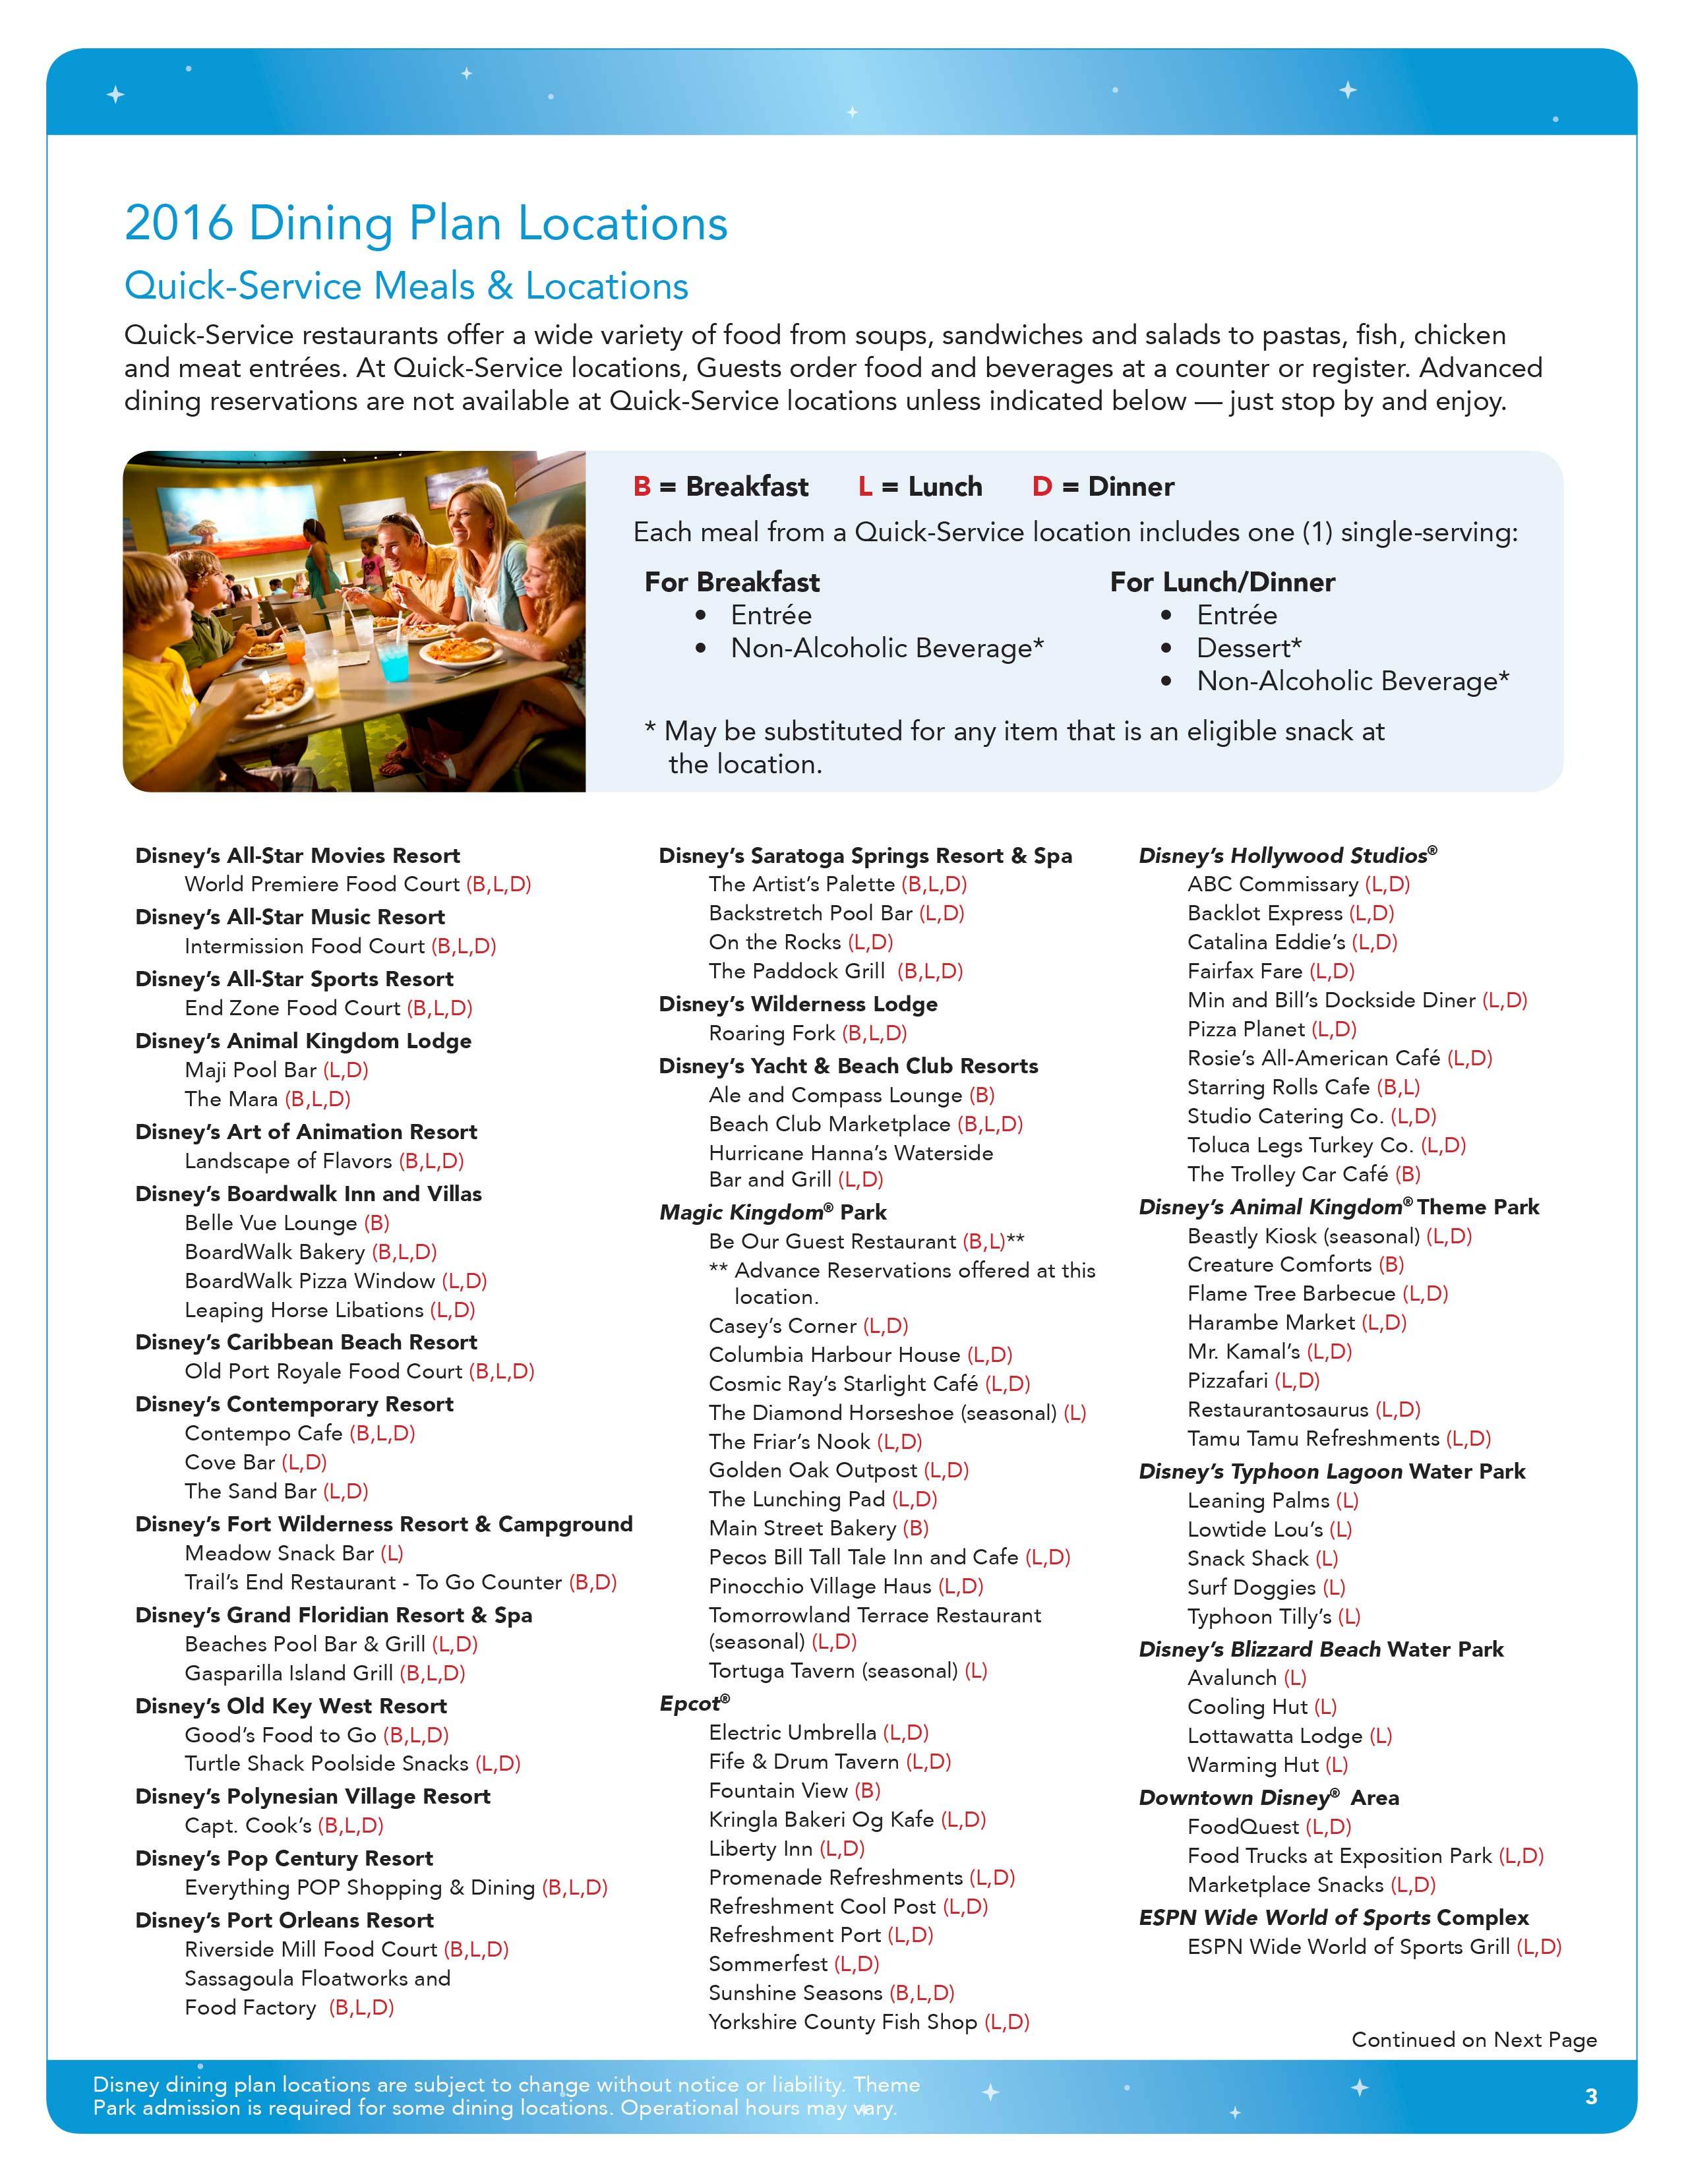 2016 Disney Dining Plan brochures